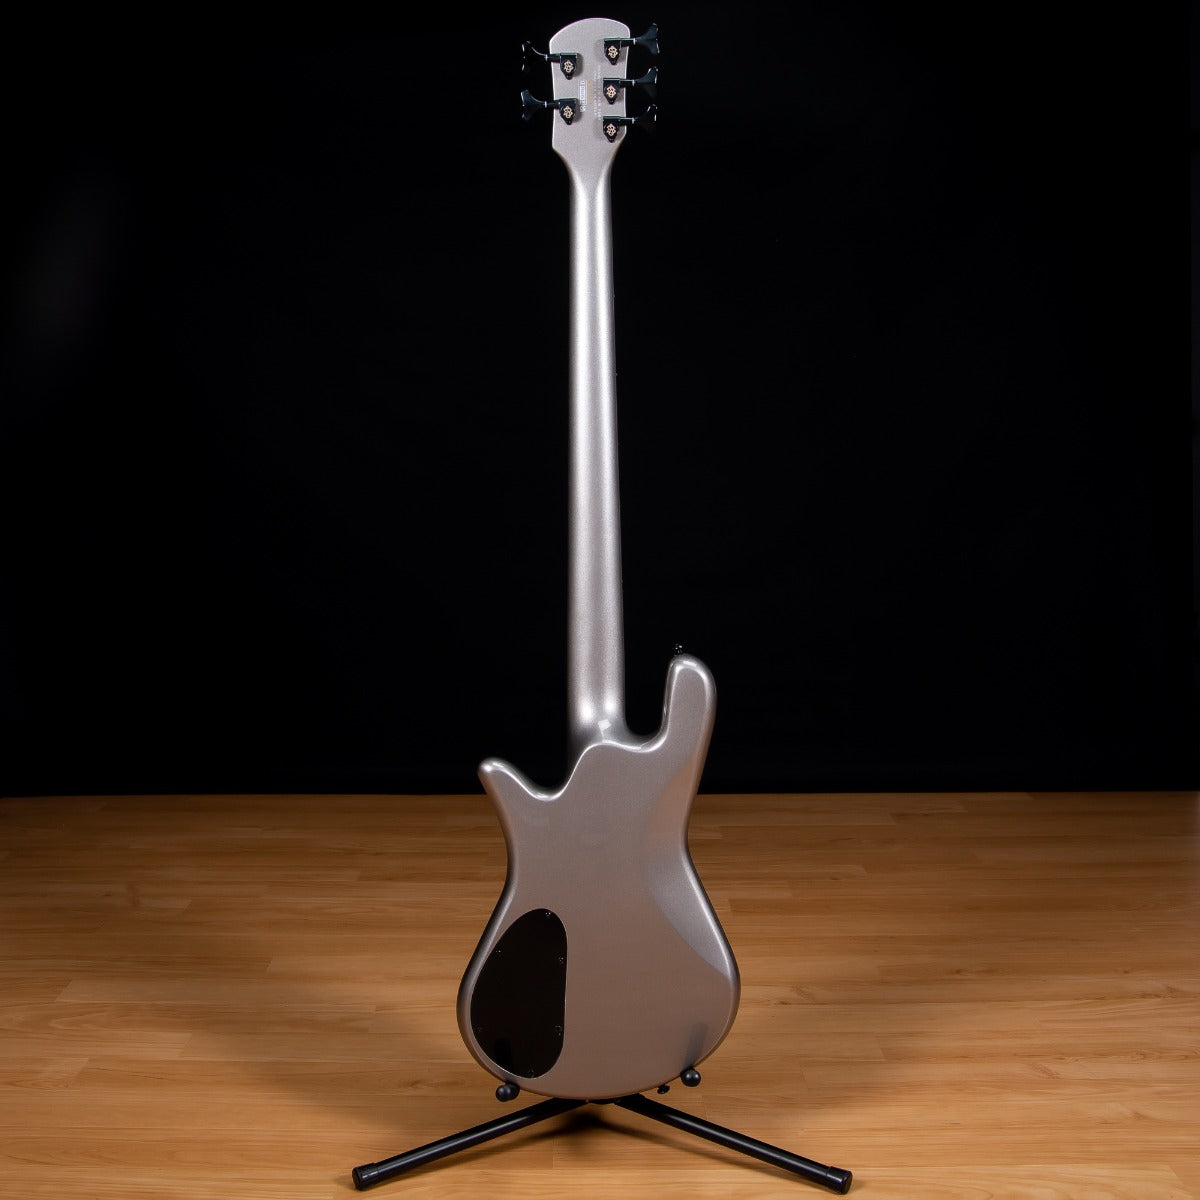 Spector NS Ethos HP 5 Bass Guitar - Gunmetal Gloss view 10